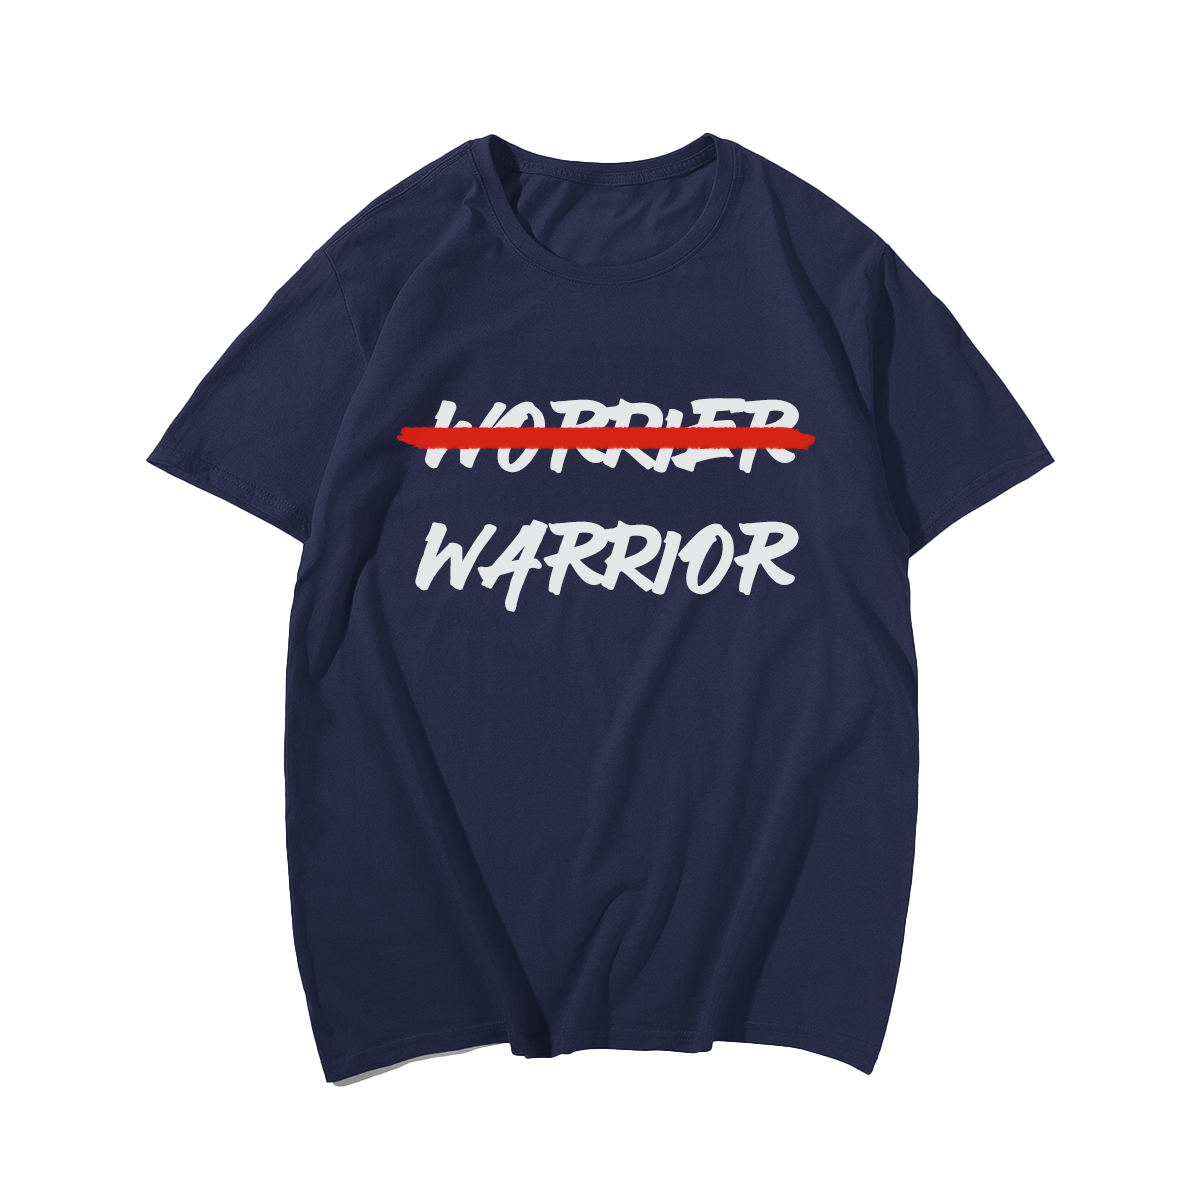 Warrior Not Worrier T-shirt for Men, Oversize Plus Size Big & Tall Man Clothing